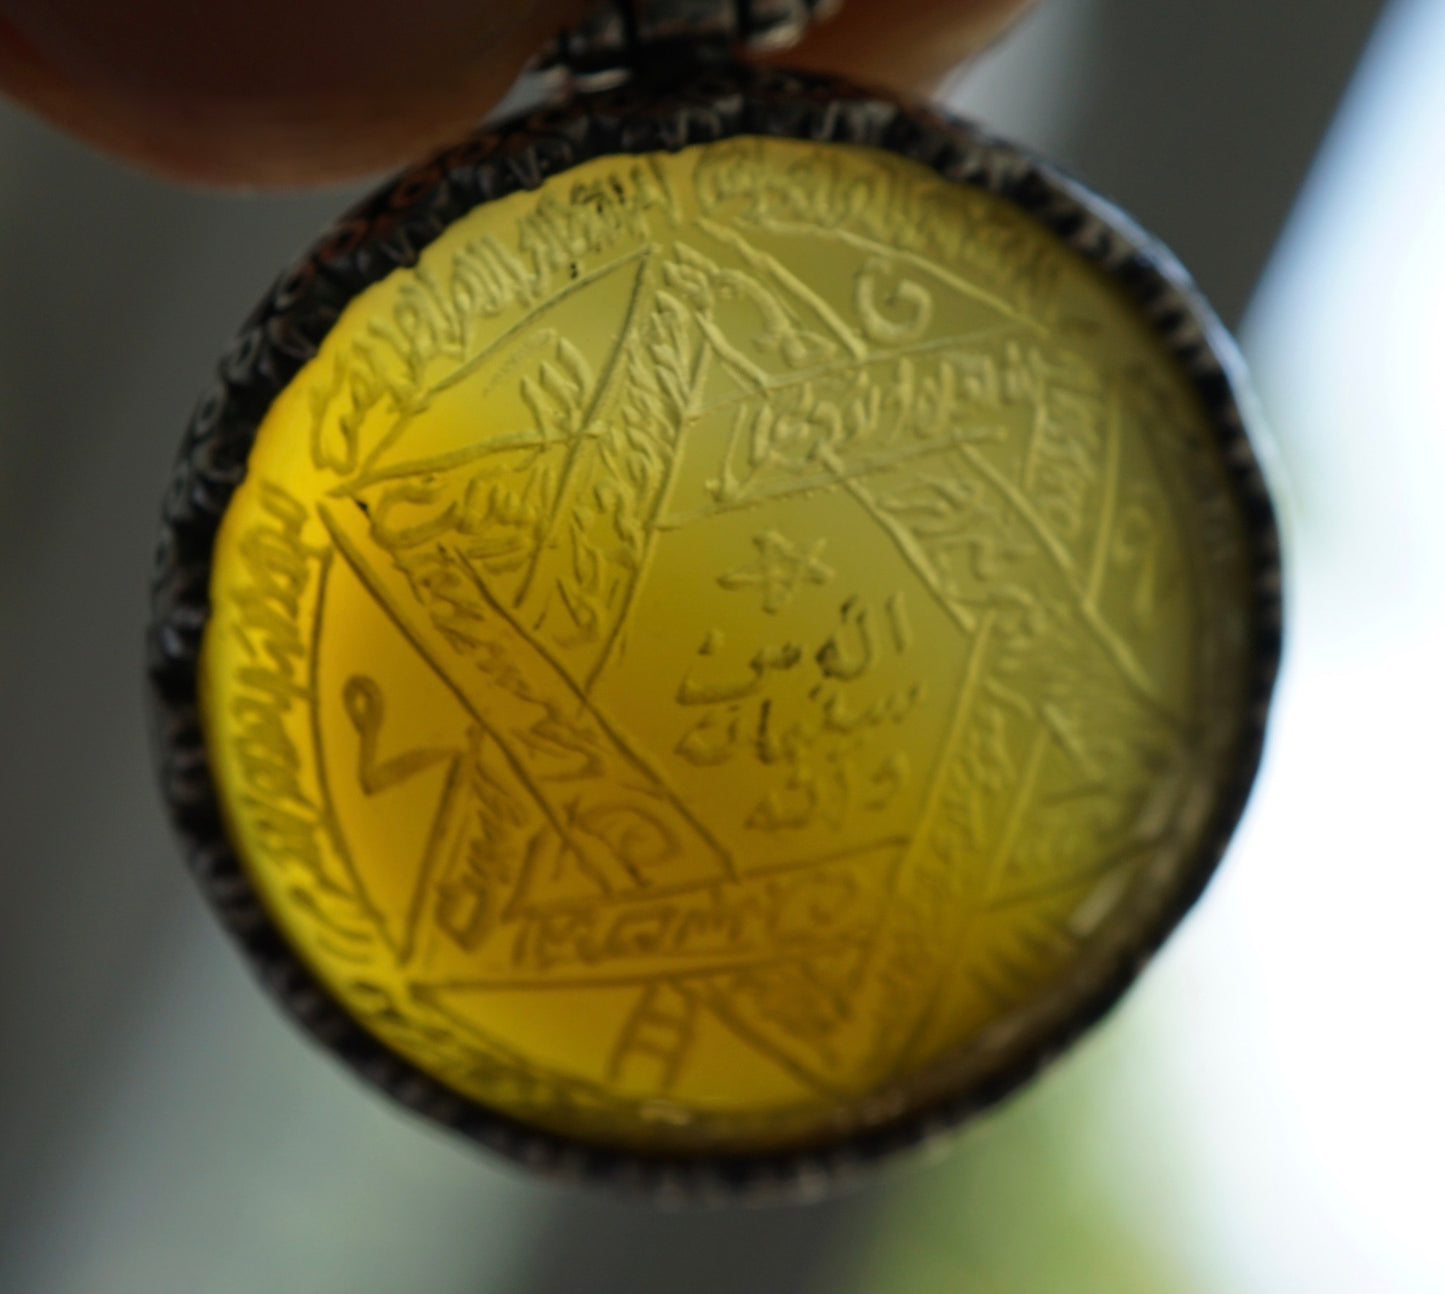 Seal of Solomon Talisman Pendant Yellow agate Zard Aqeeq 925 Silver Kings Chain